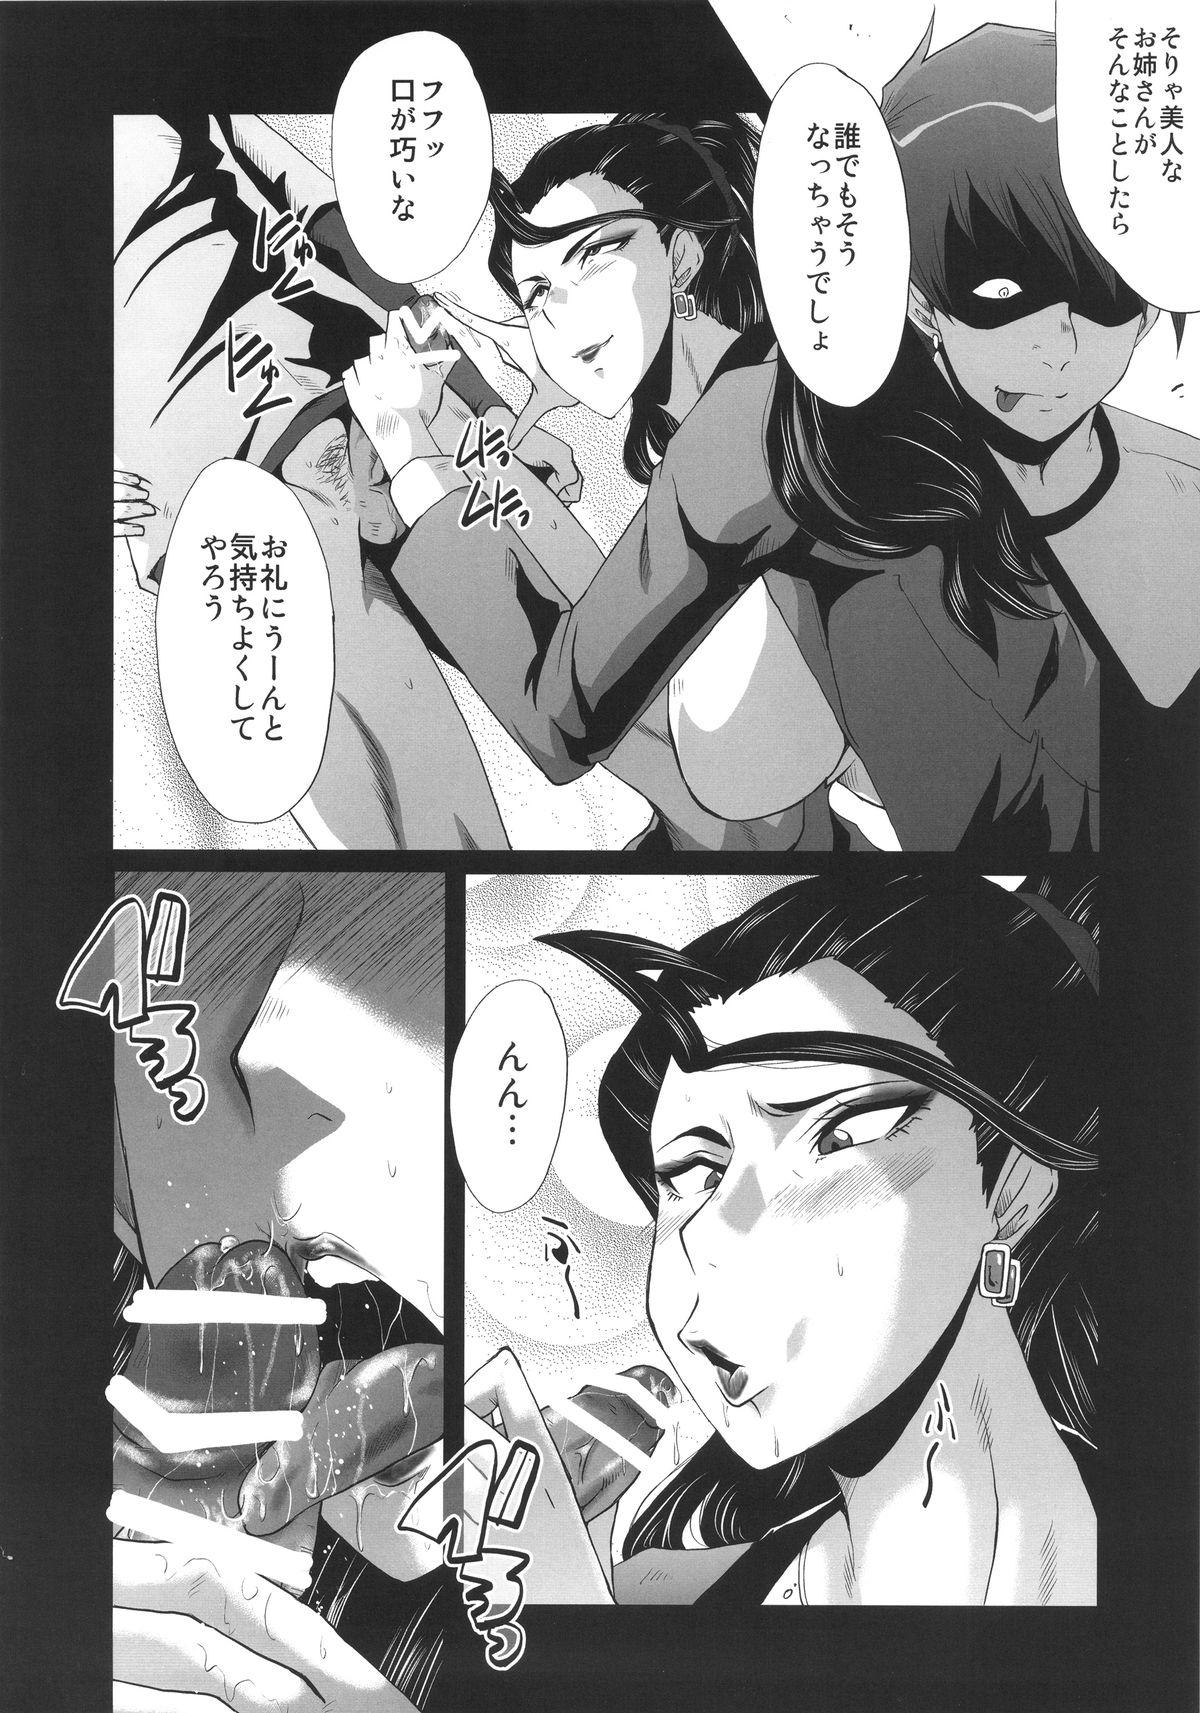 Gemidos Urabambi 52 Injuku no Kyouen - The idolmaster Homosexual - Page 8